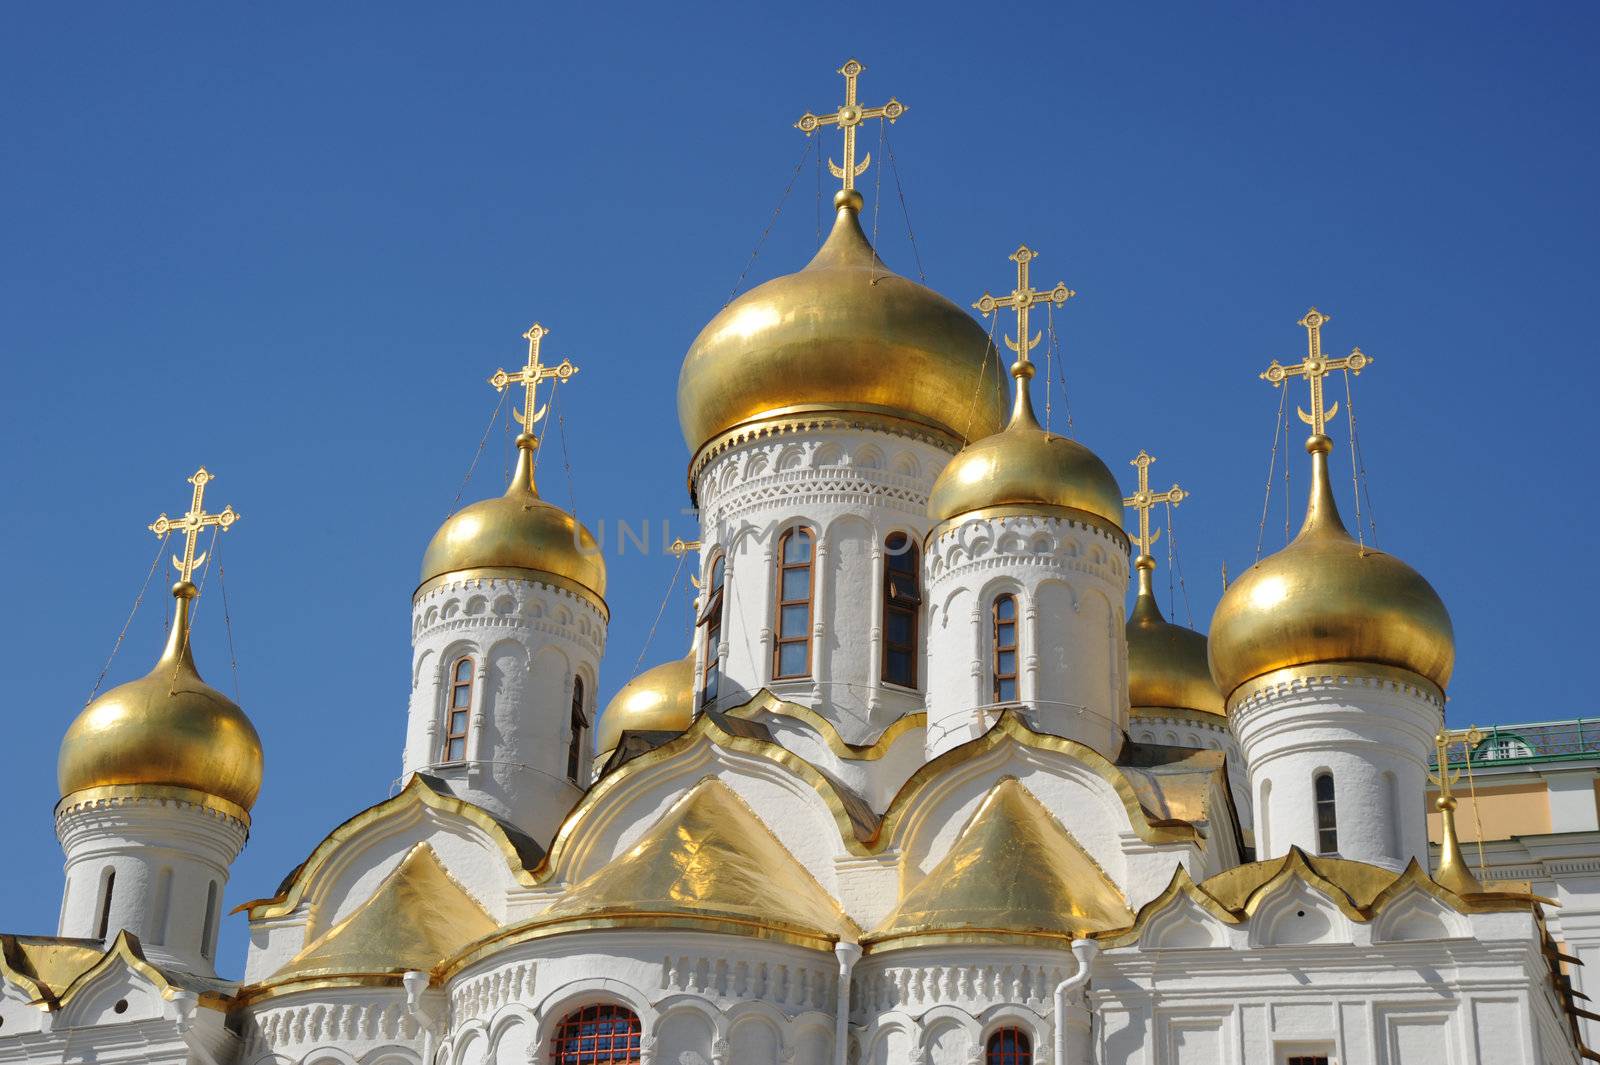 Moscow church by Alenmax